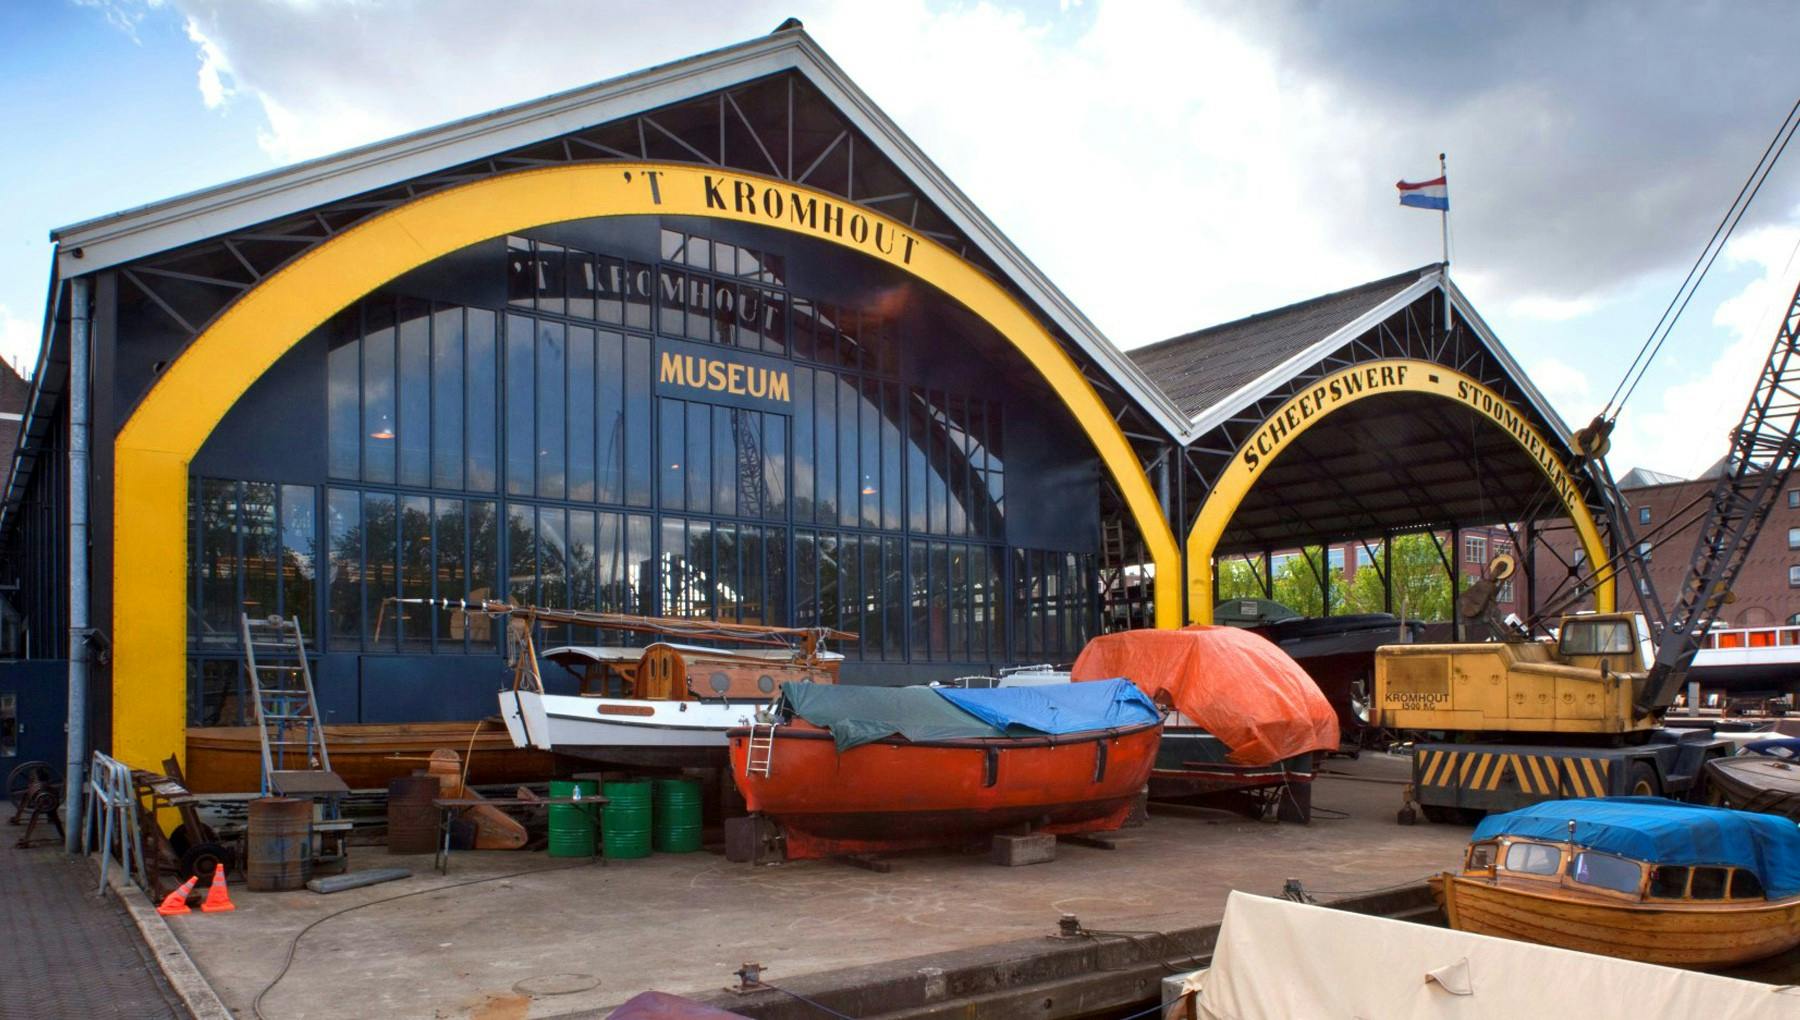 Museum 't Kromhout (‘t Kromhout Shipyard)